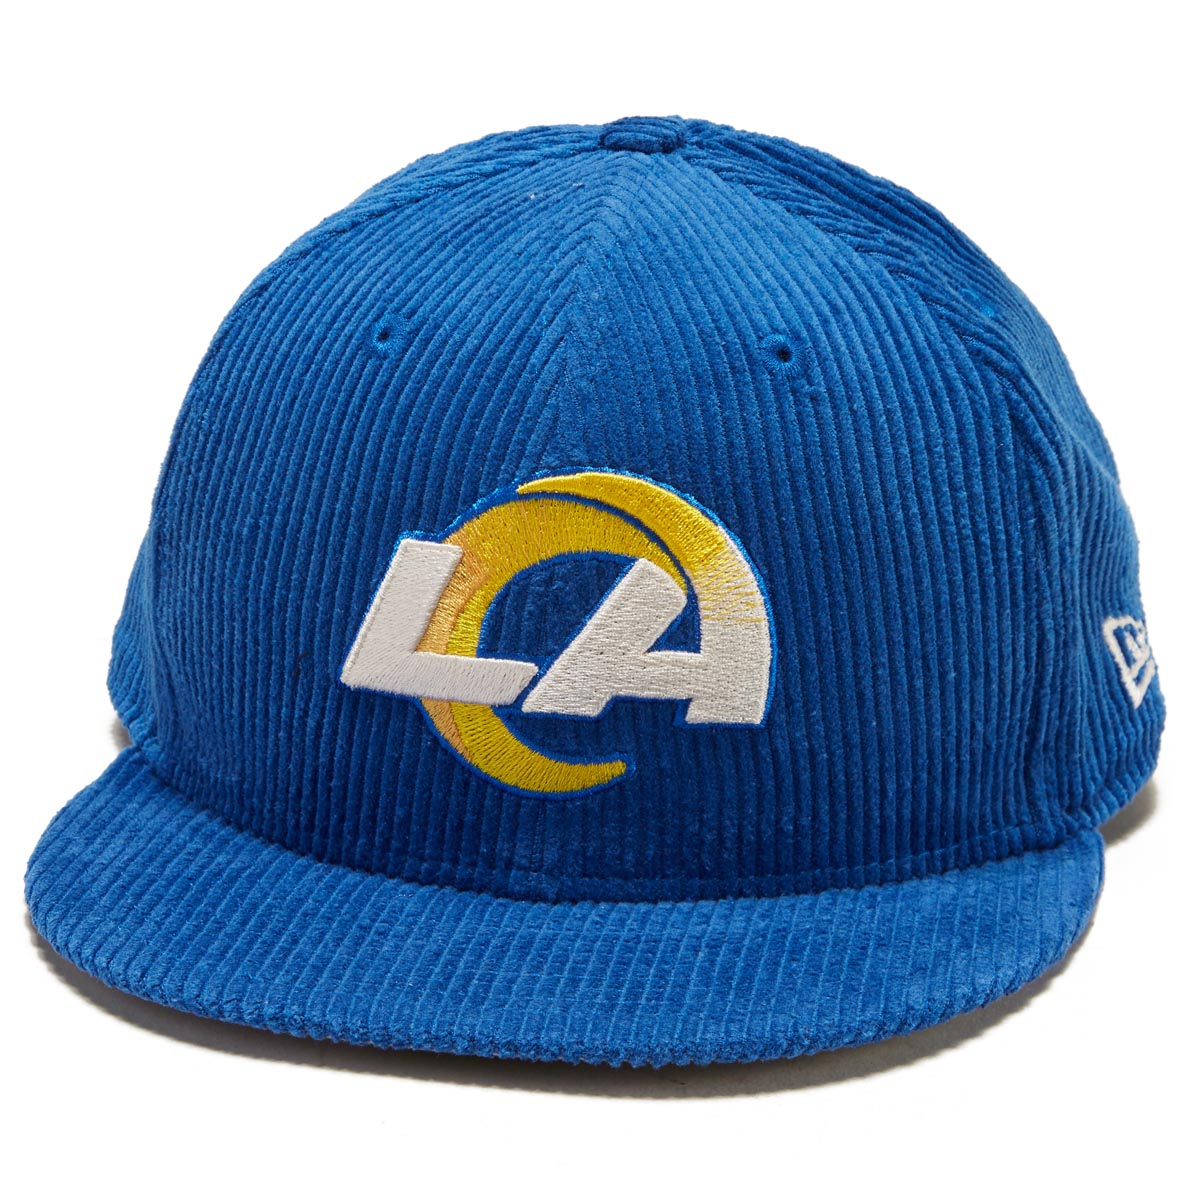 New Era 5950 Letterman Pin Hat - Los Angeles Rams image 1